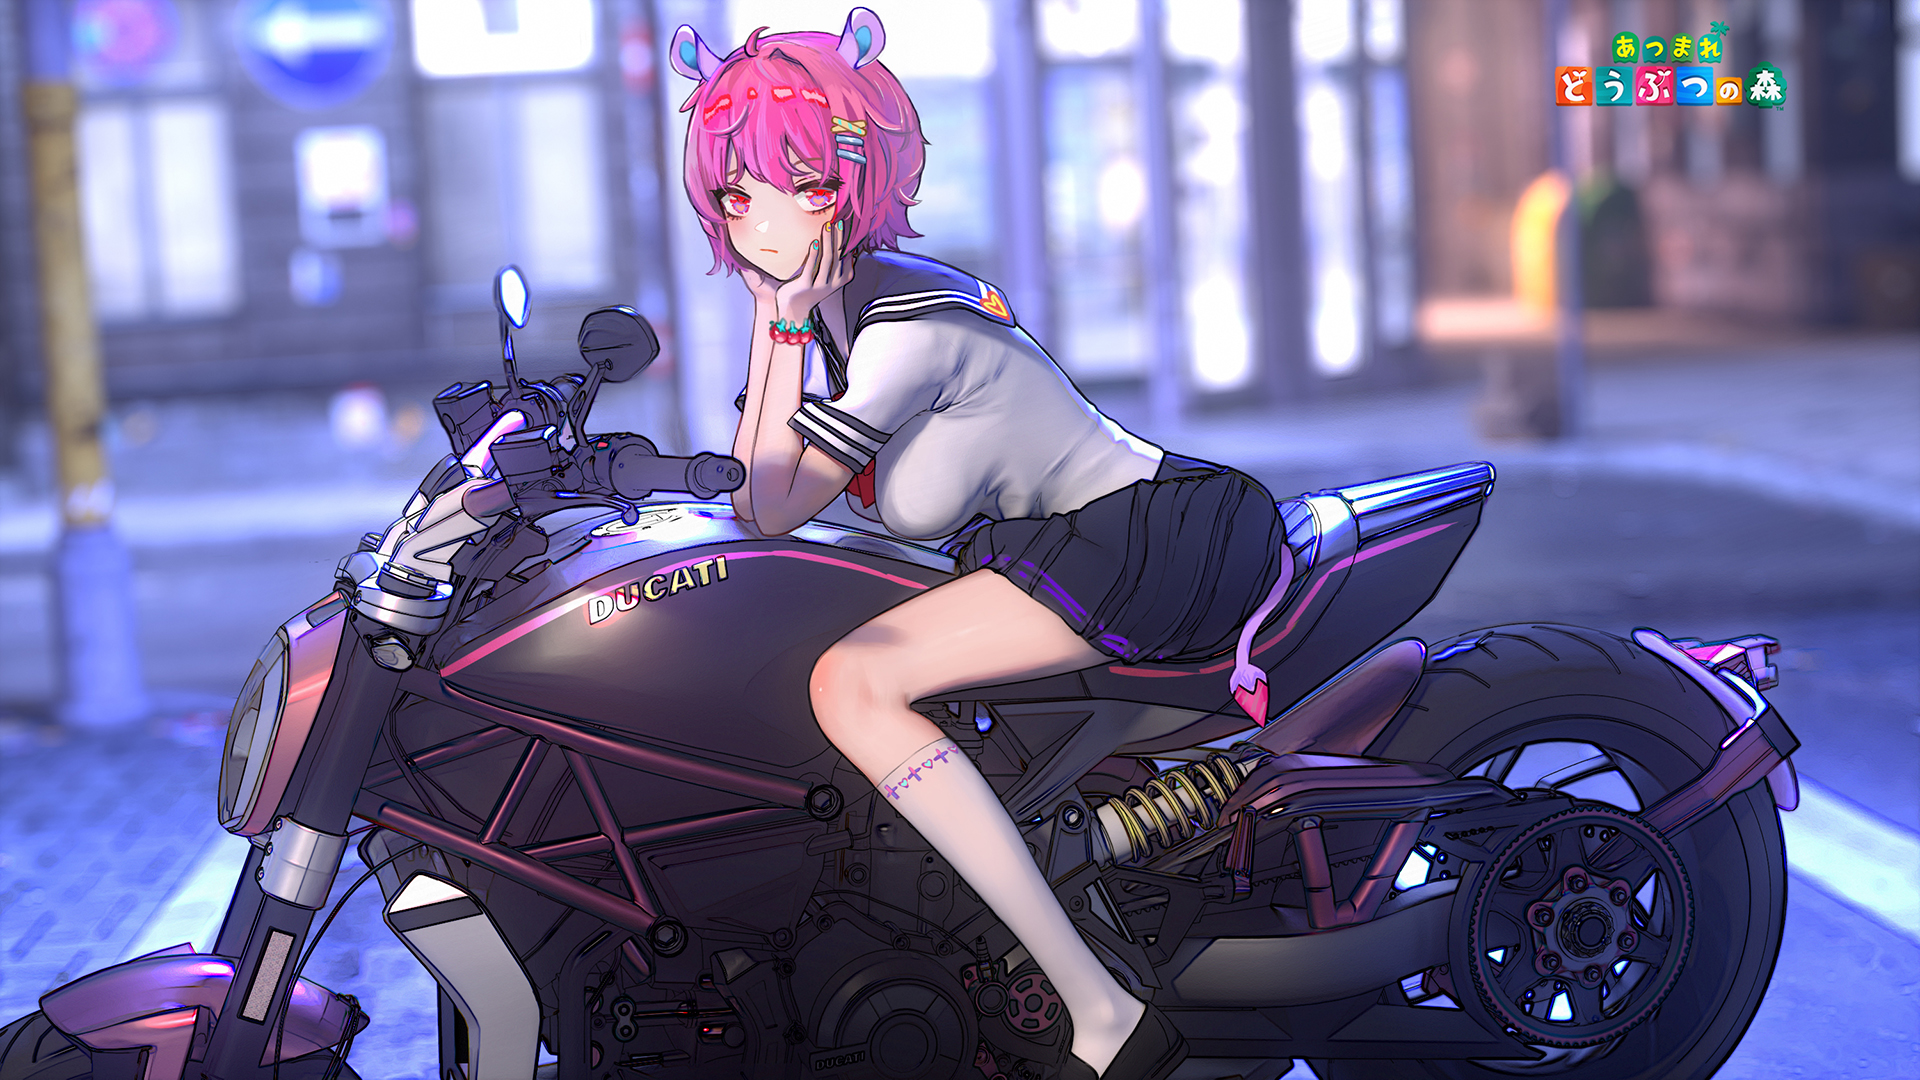 Motorcycle Short Hair Ears Tail Pink Hair Red Eyes School Uniform Anime Girls Vehicle Anime Ducati Wallpaper:1920x1080